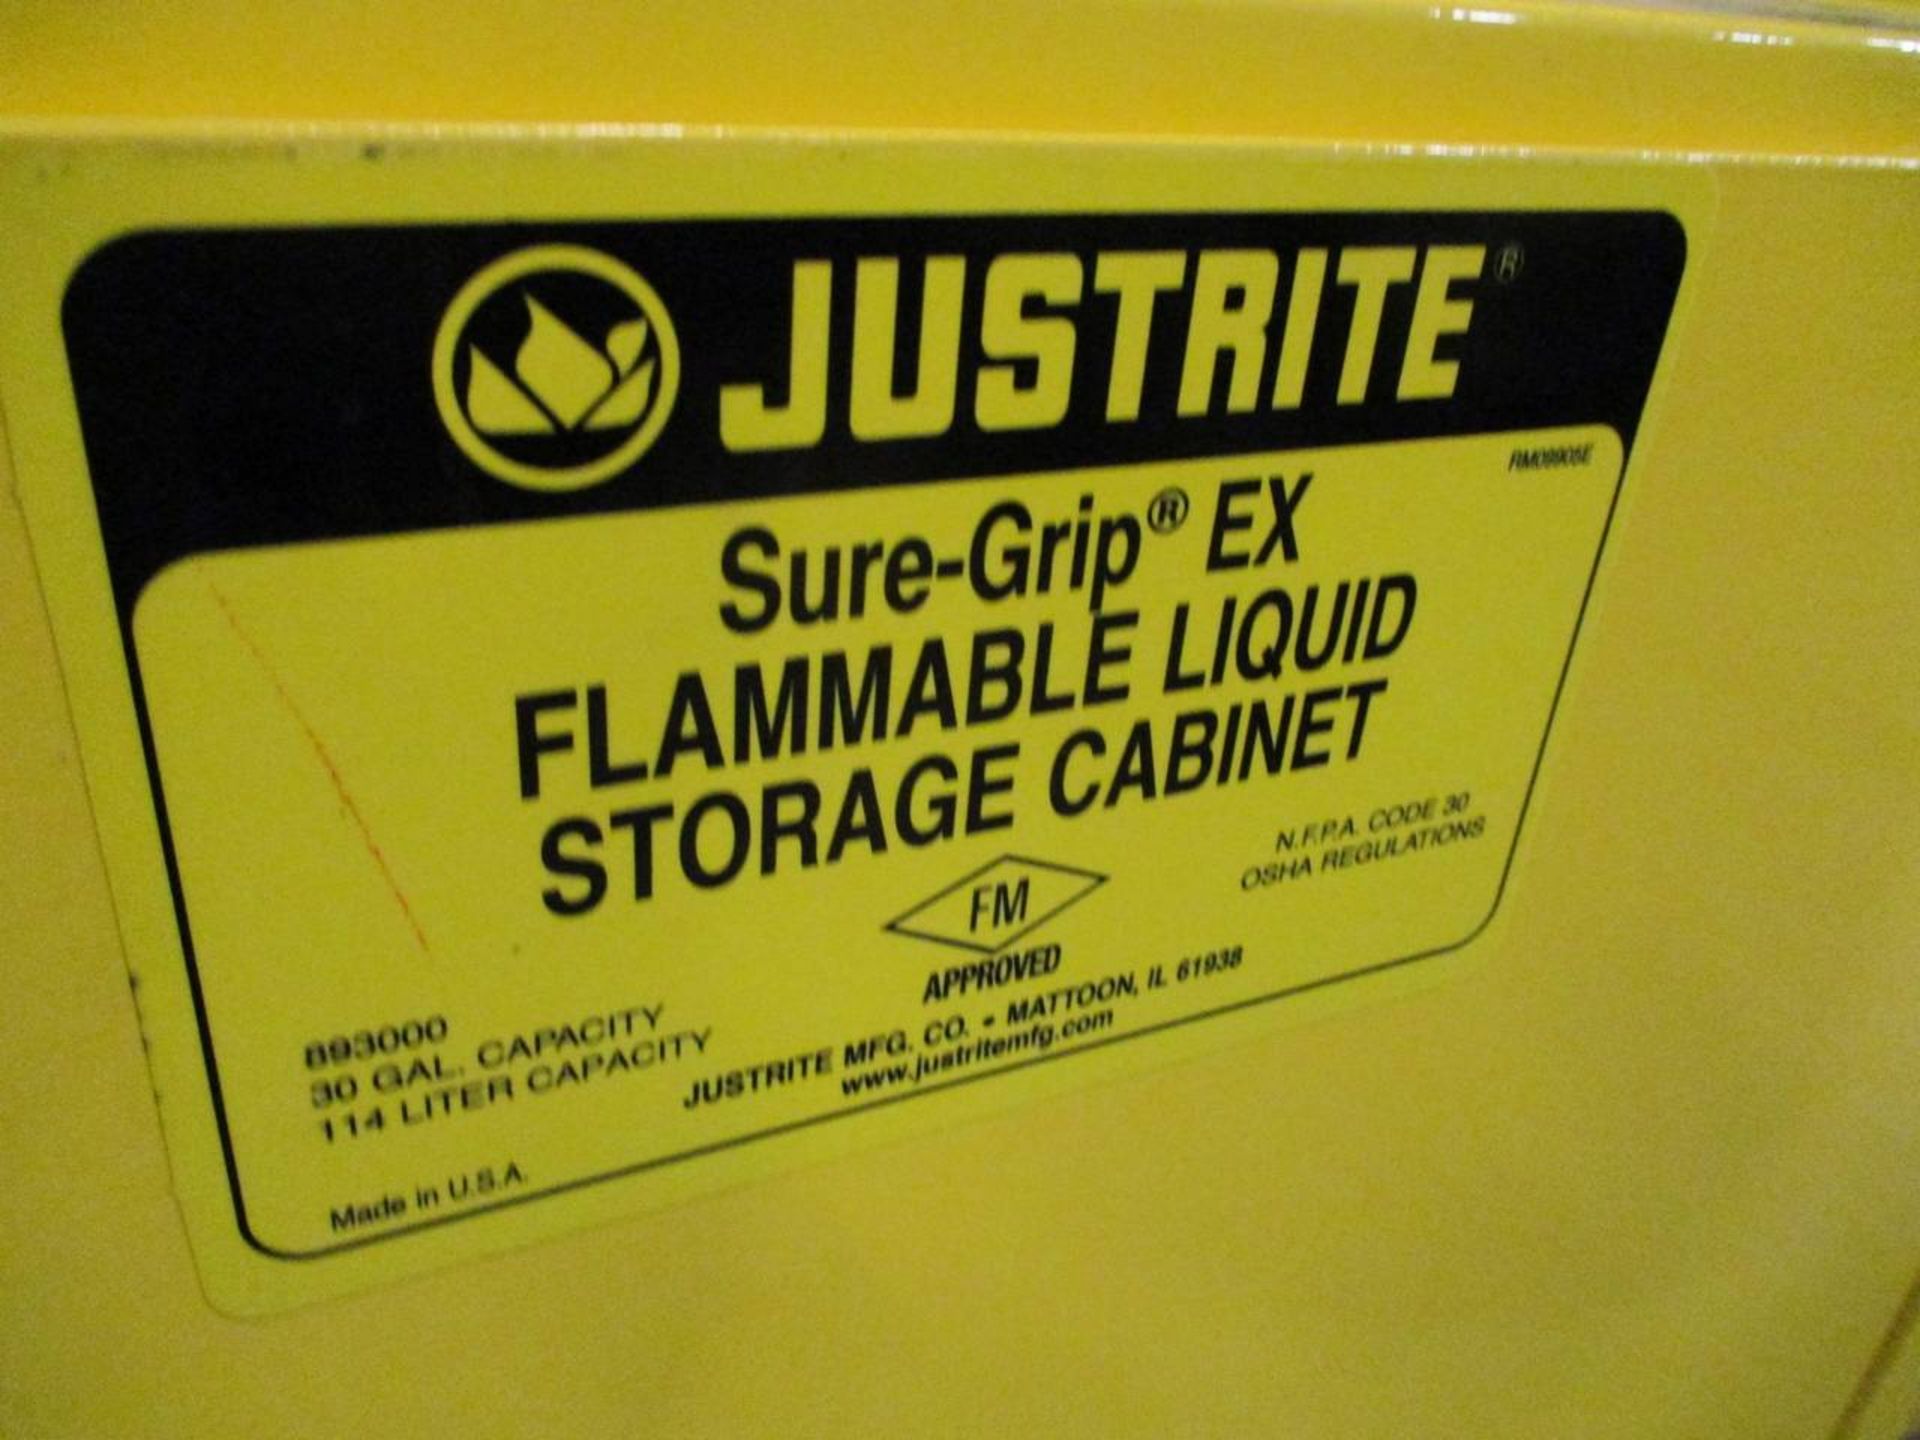 Just Rite Sure-Grip EX 30 Gallon Flammable Liquid Storage Cabinet - Image 4 of 7